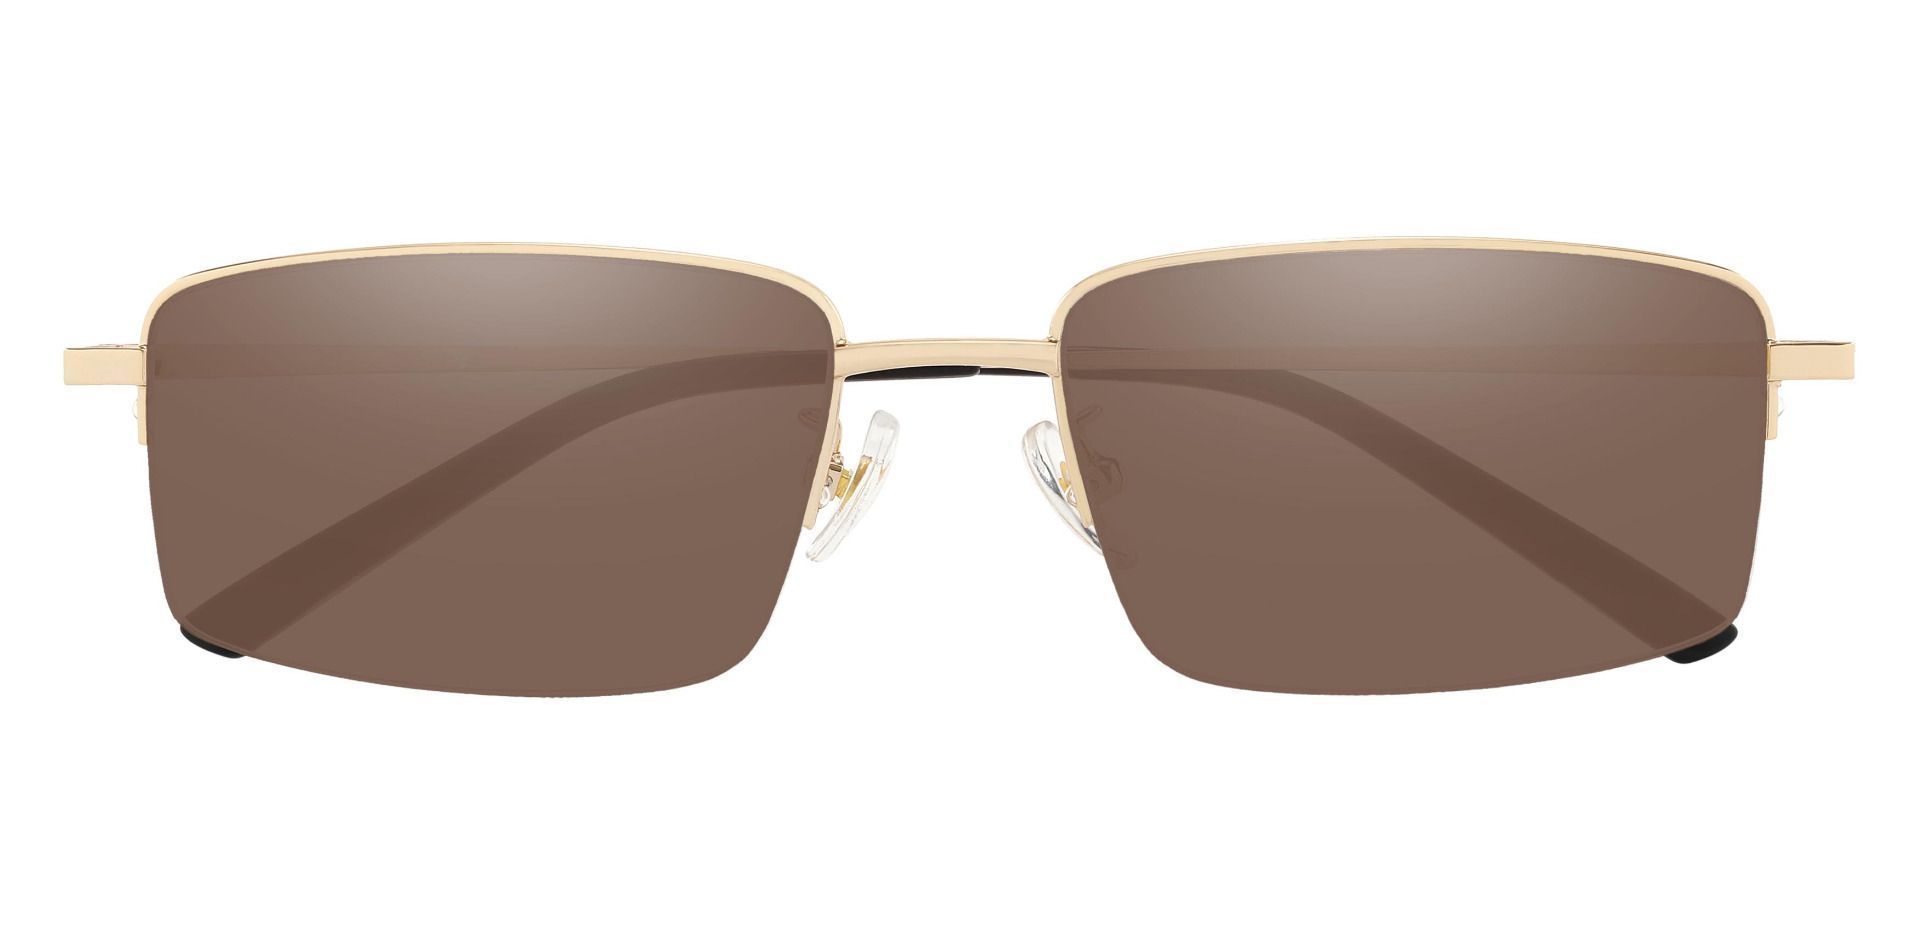 Wayne Rectangle Prescription Sunglasses - Gold Frame With Brown Lenses